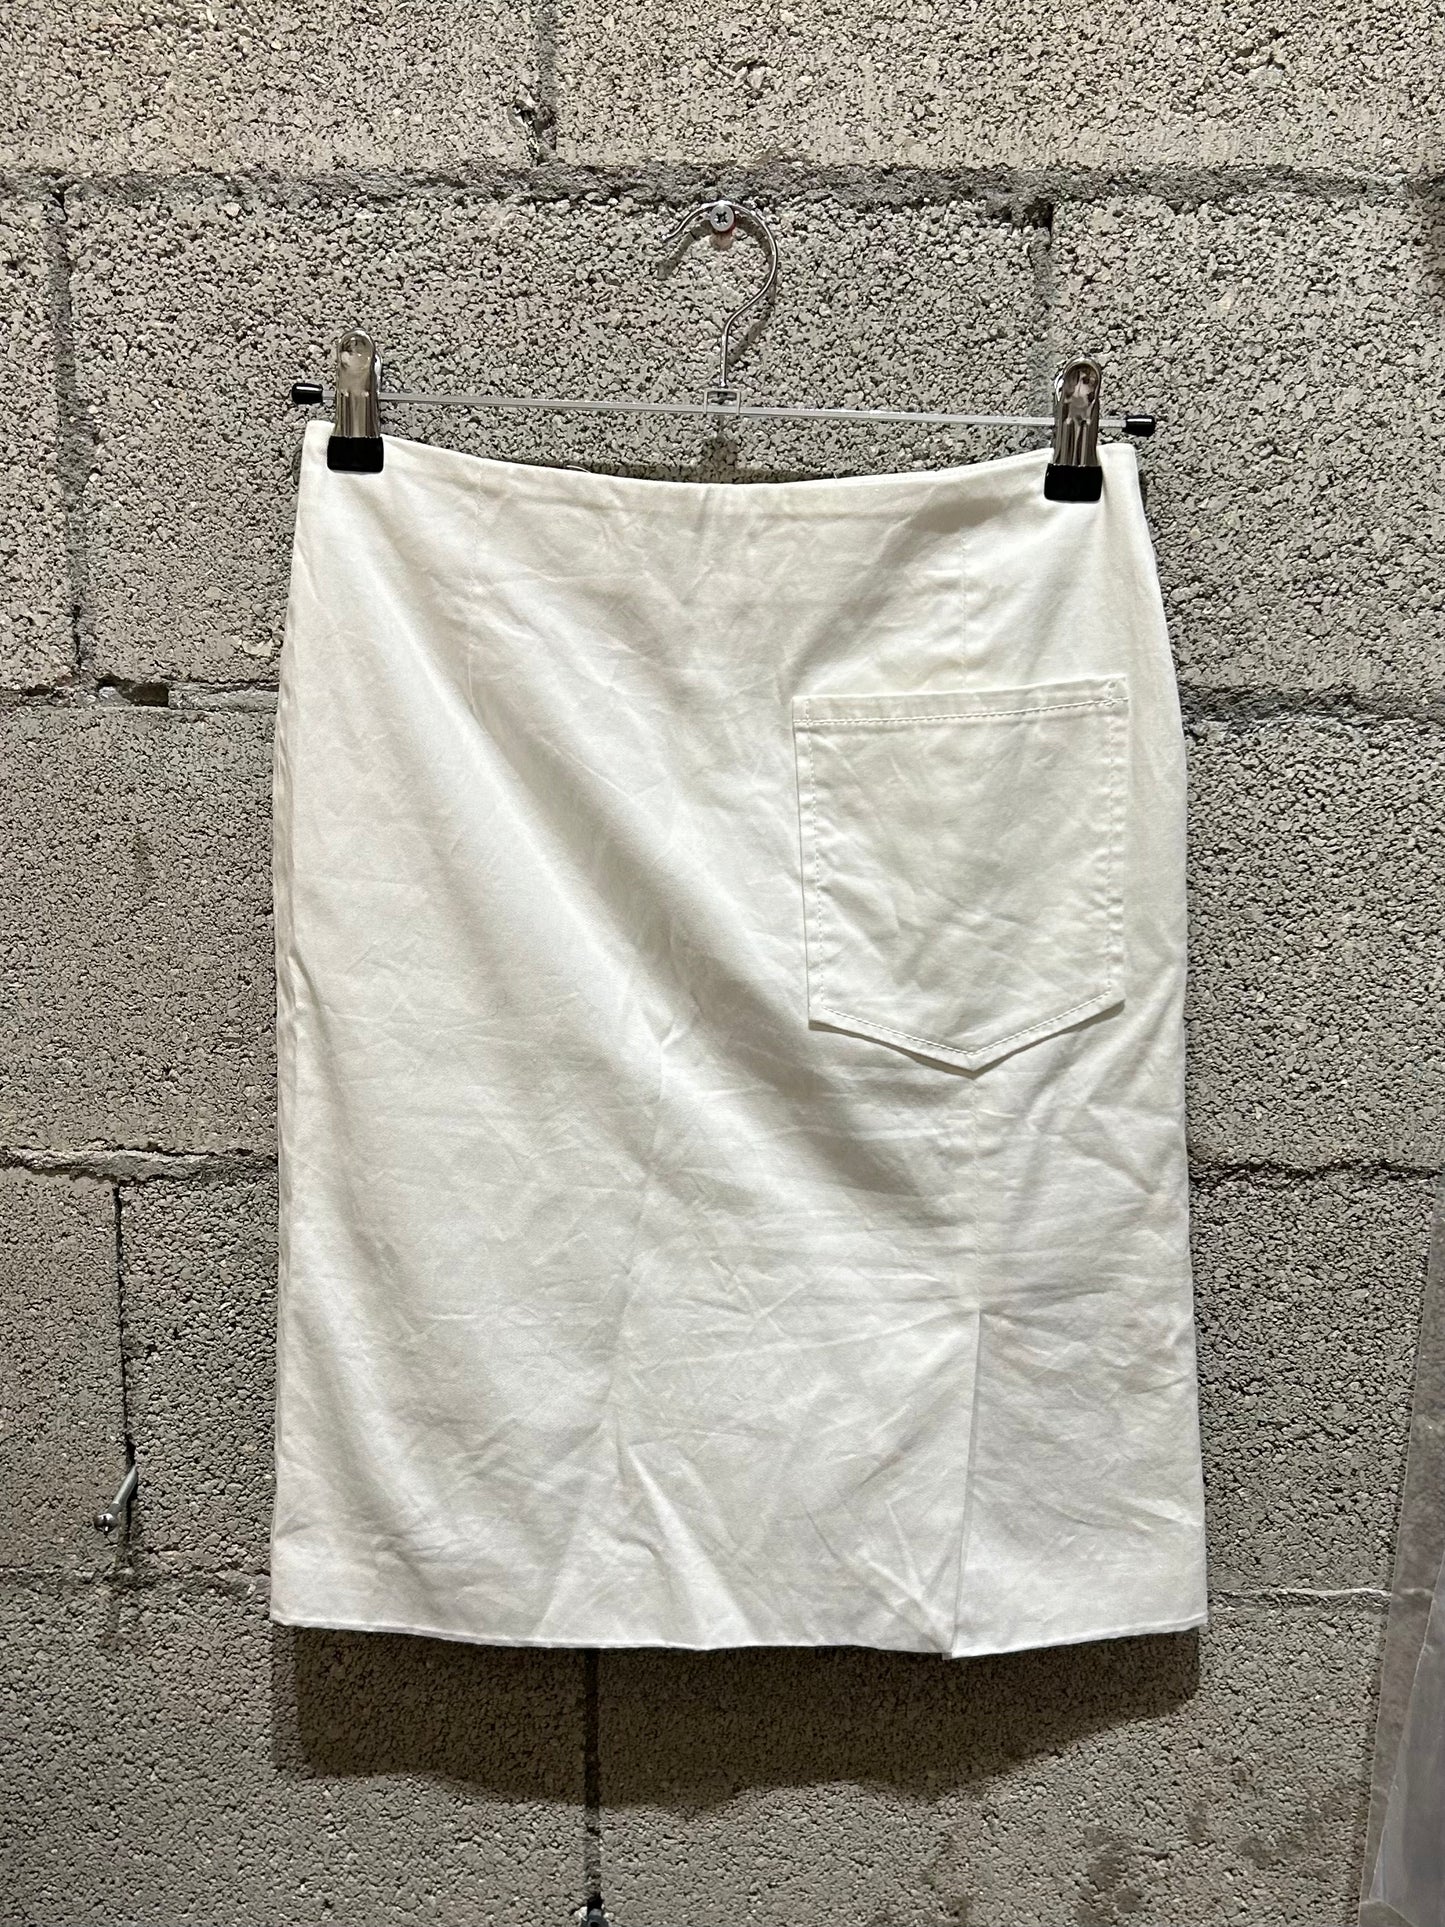 ACNE STUIOS classic white skirt